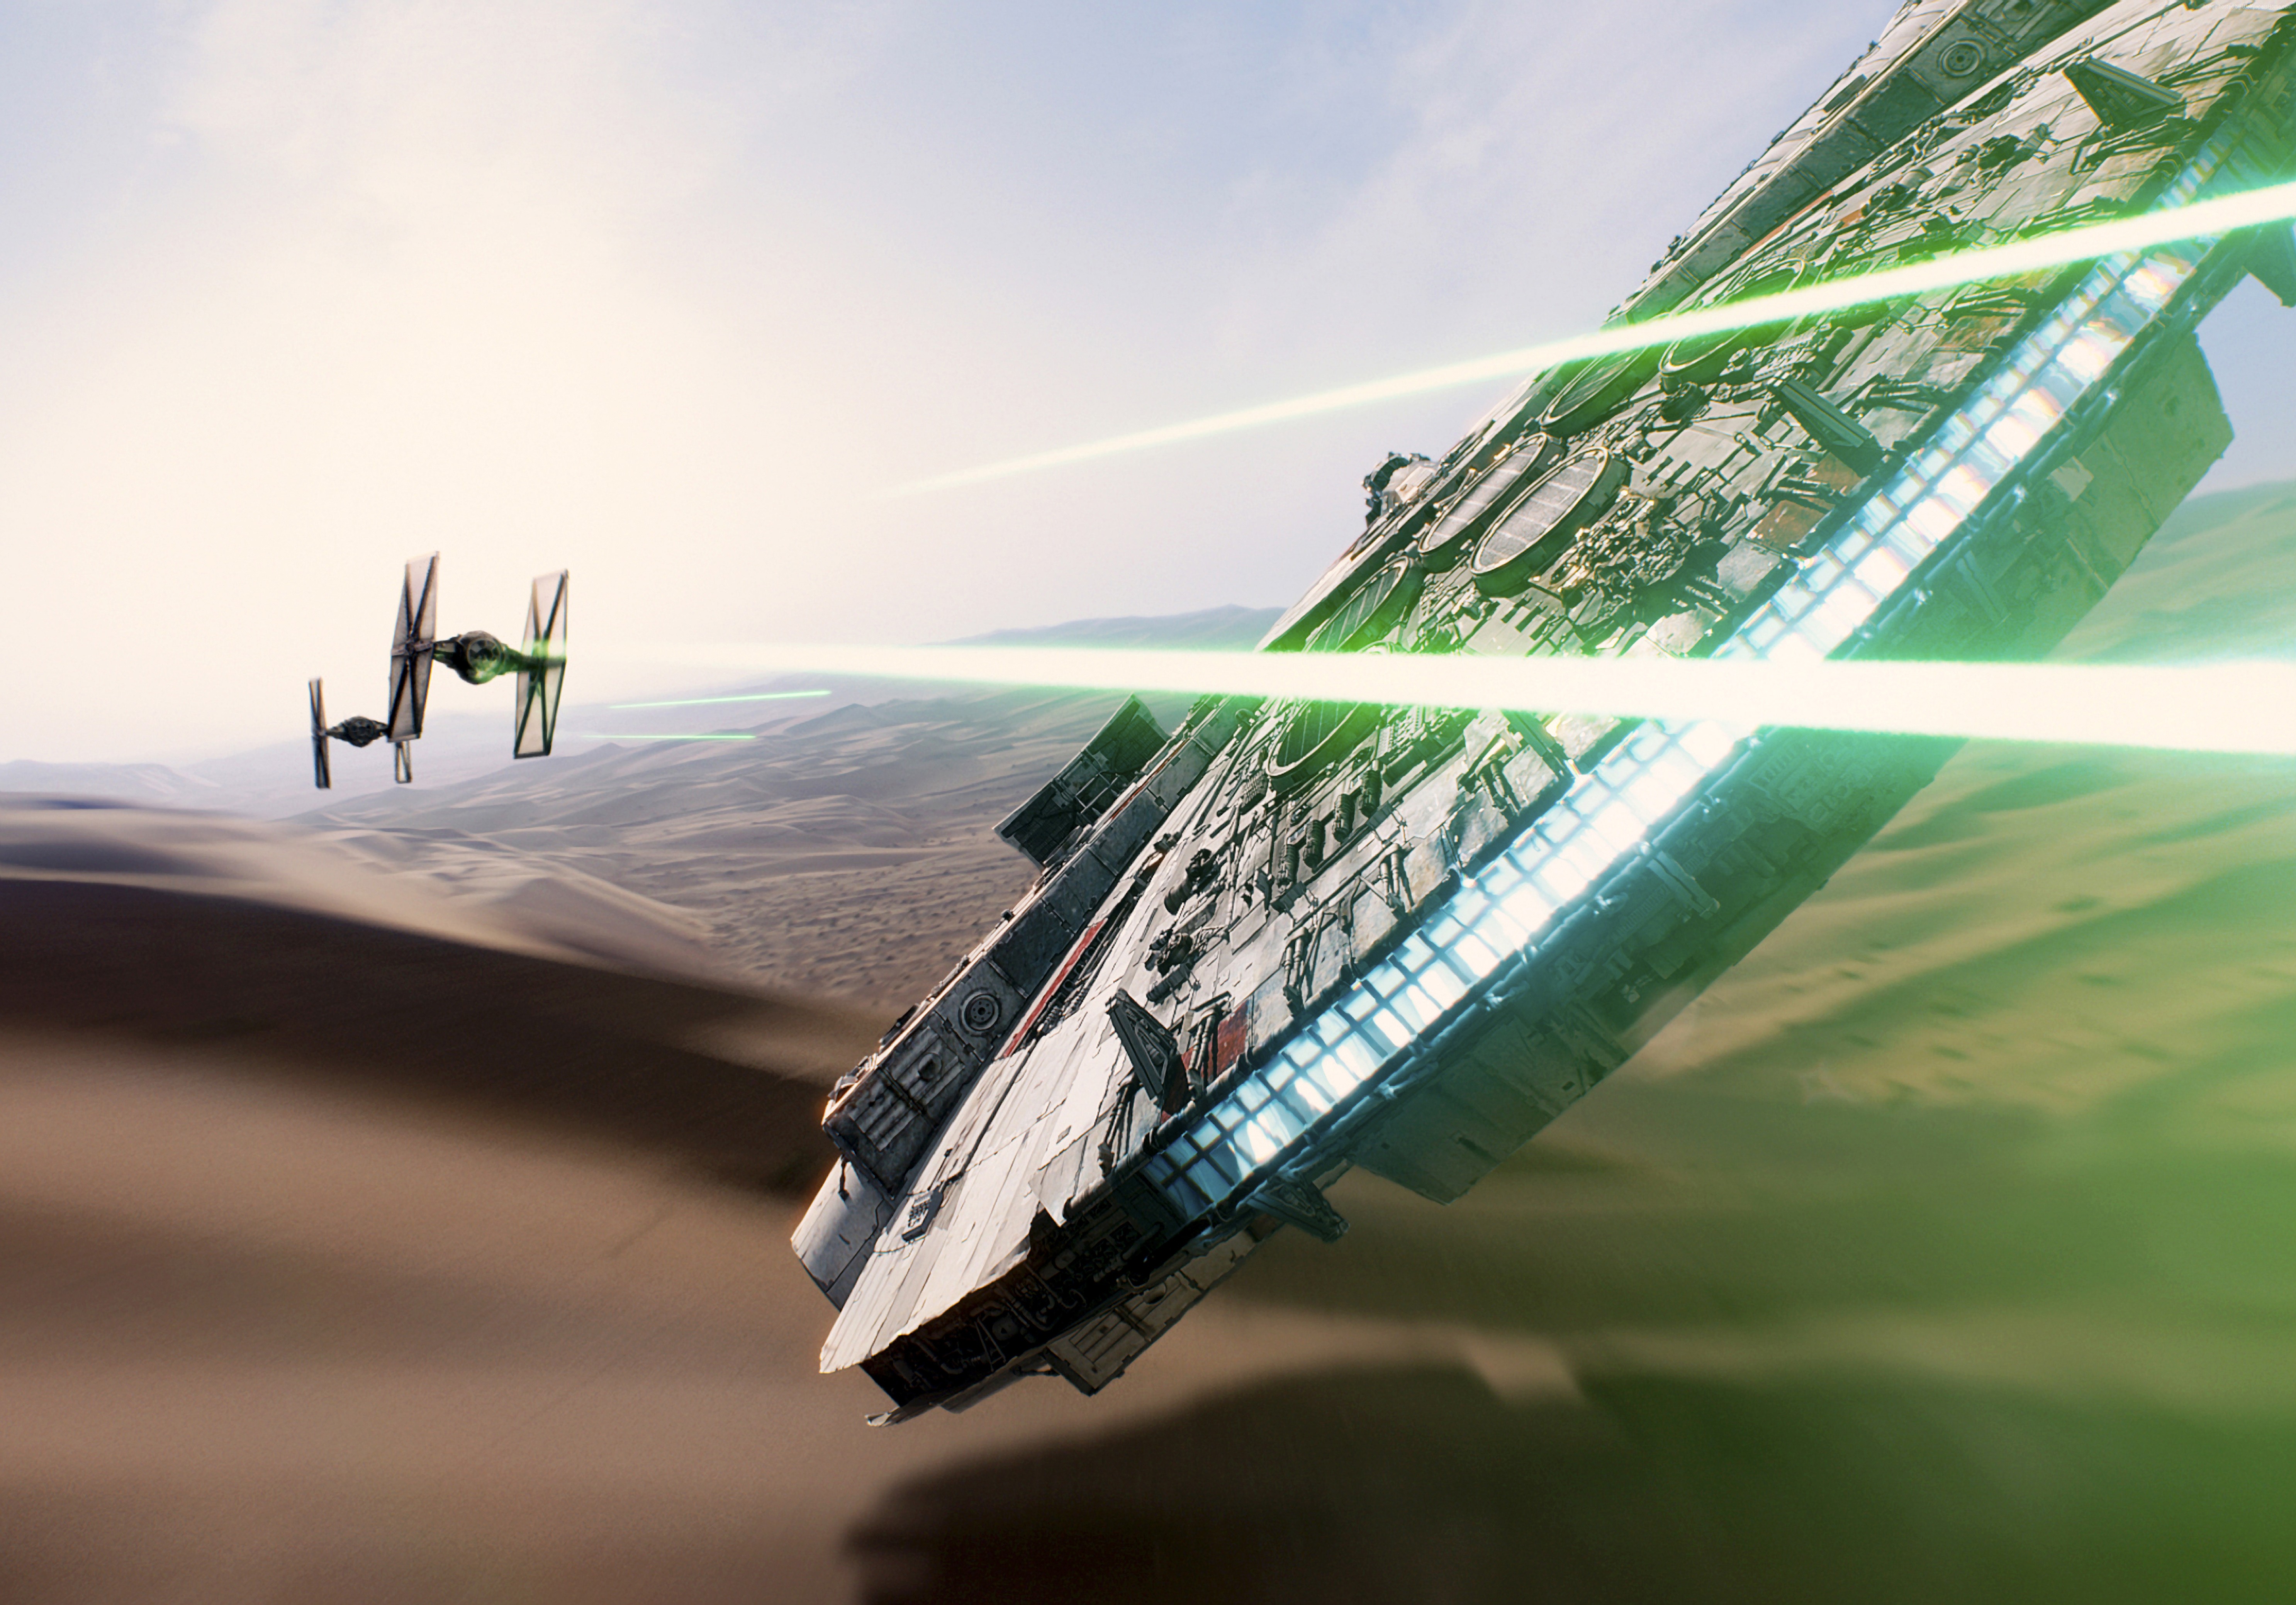 Star Wars Episode Vii The Force Awakens 4k Ultra HD Wallpaper